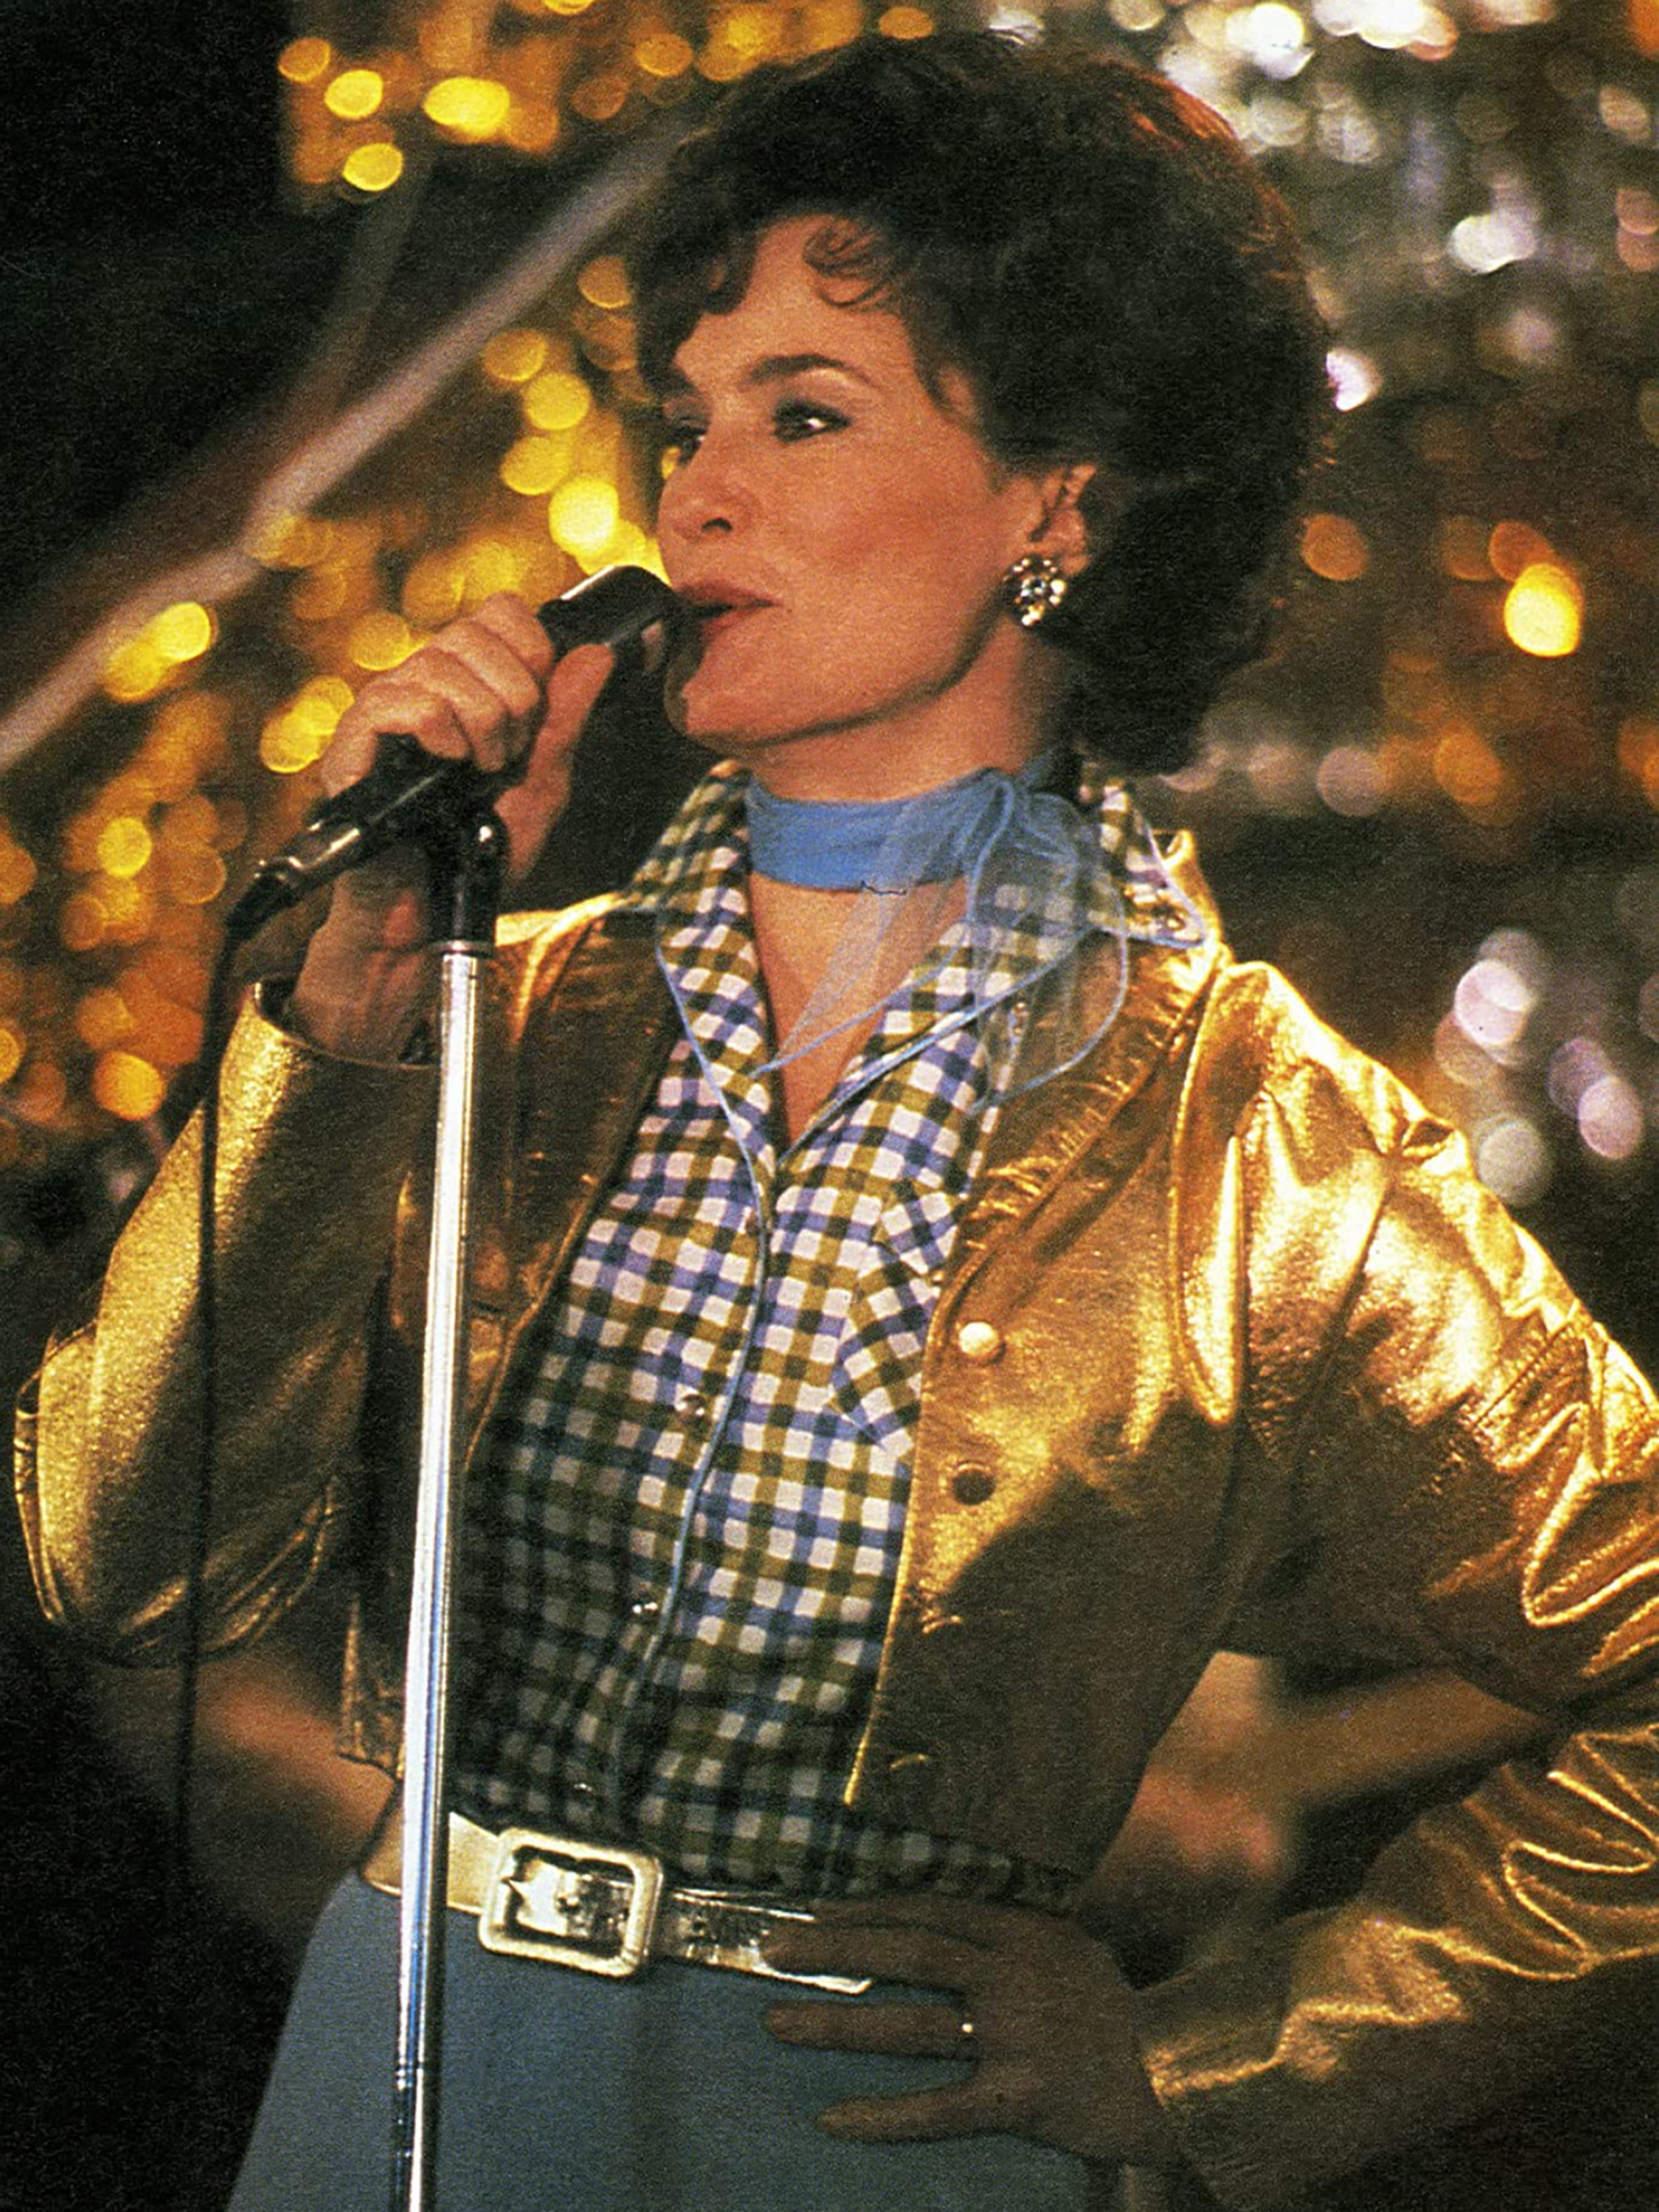 Jessica Lange in “Sweet Dreams” (1985)